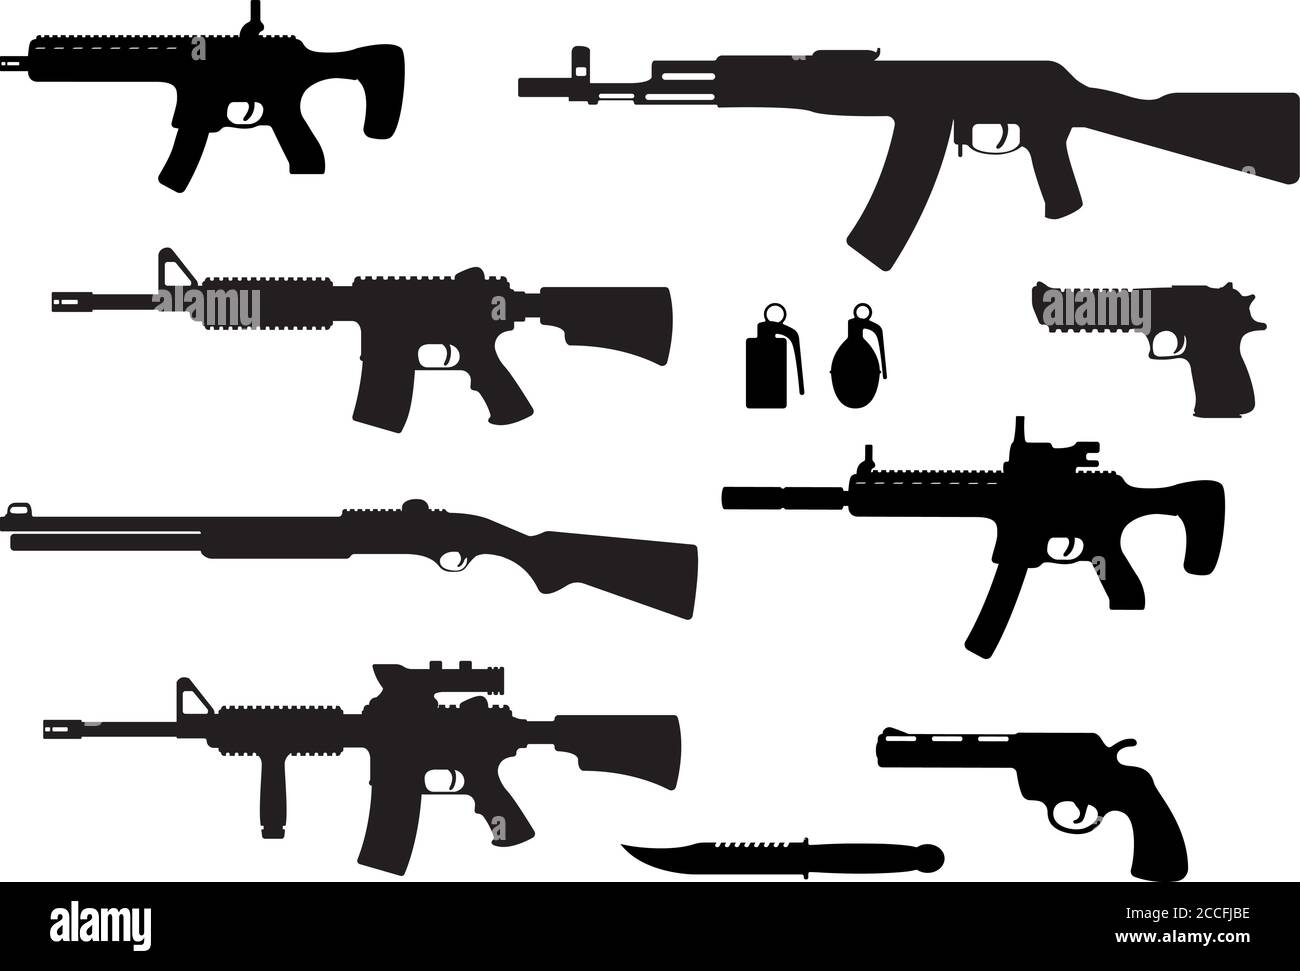 Set of weapon military rifle, revolver and desert eagle pistol, shotgun carbine, grenade, knife and submachine gun black simple icon vector illustrati Stock Vector